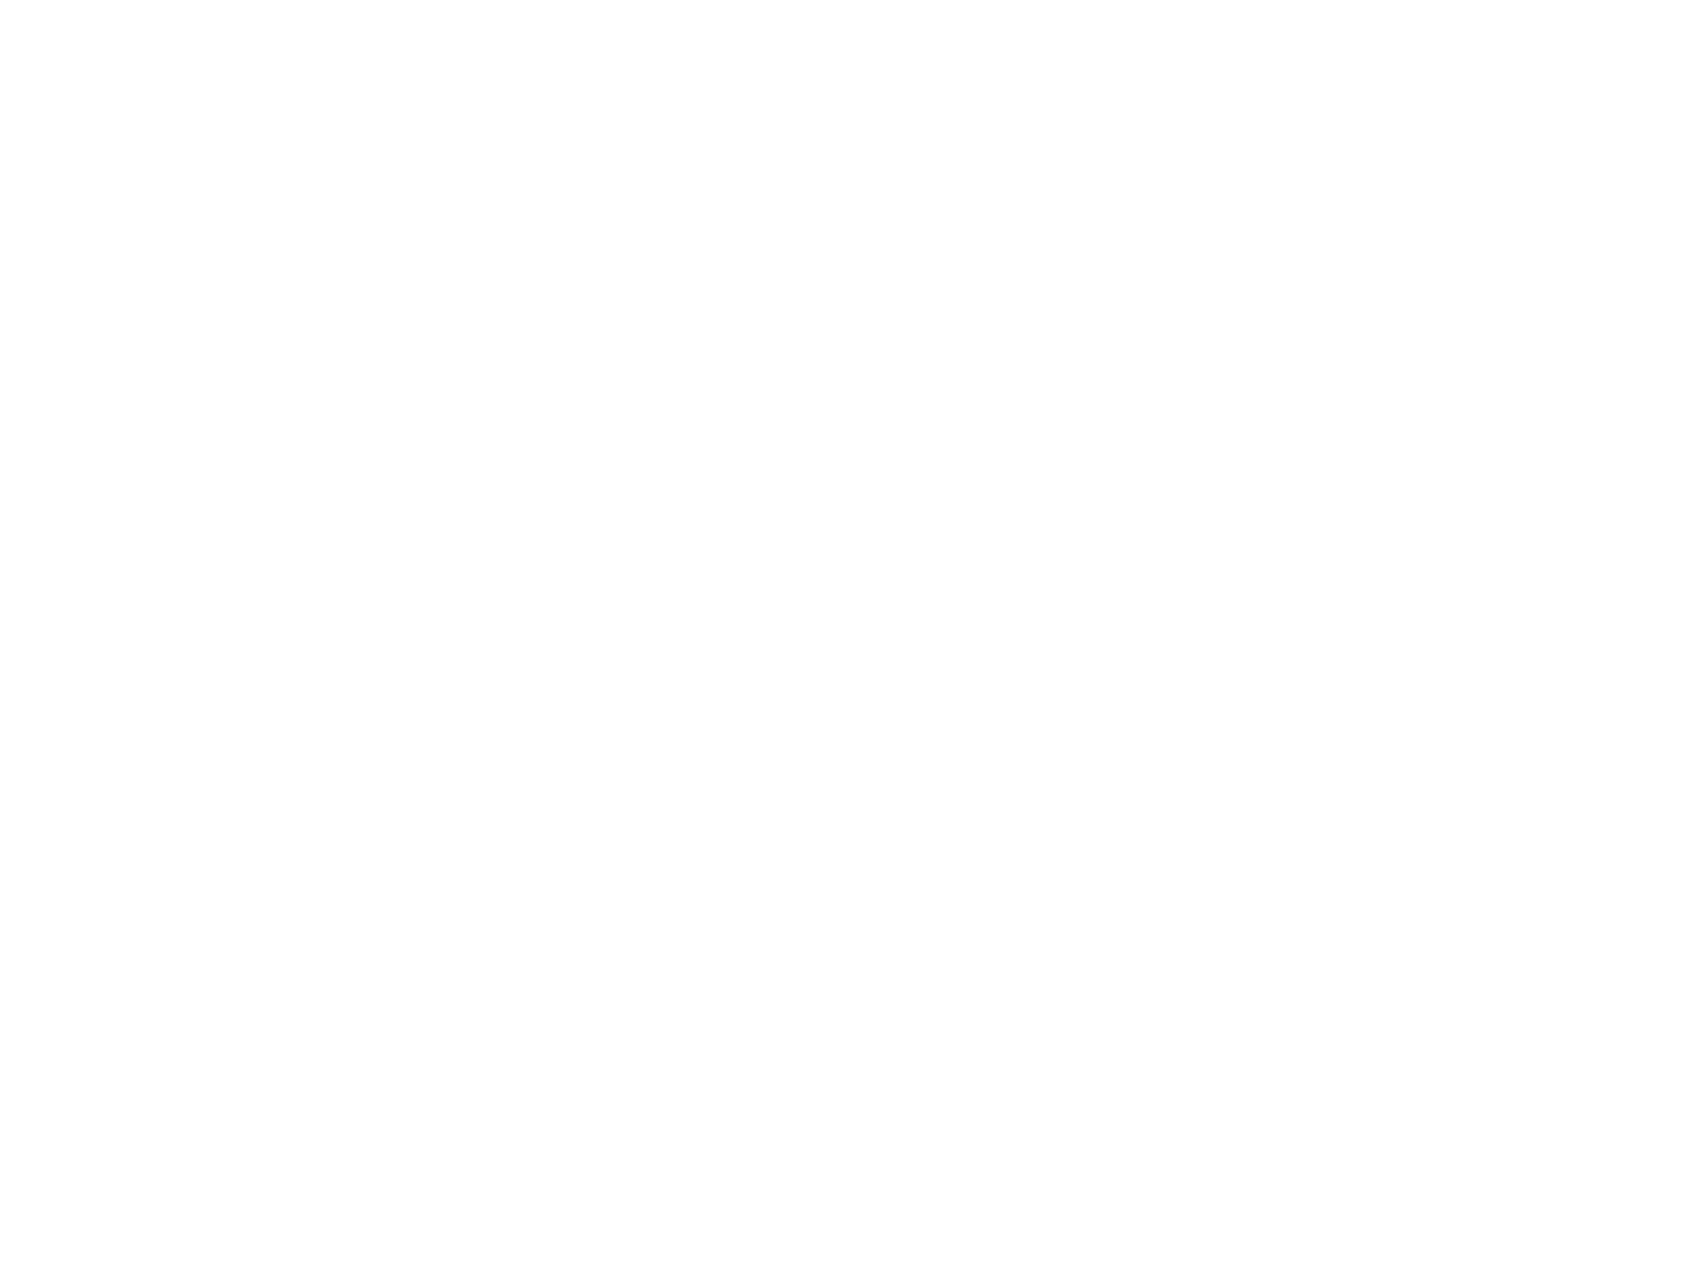 Cool Schoolof Performing Arts Logo PNG